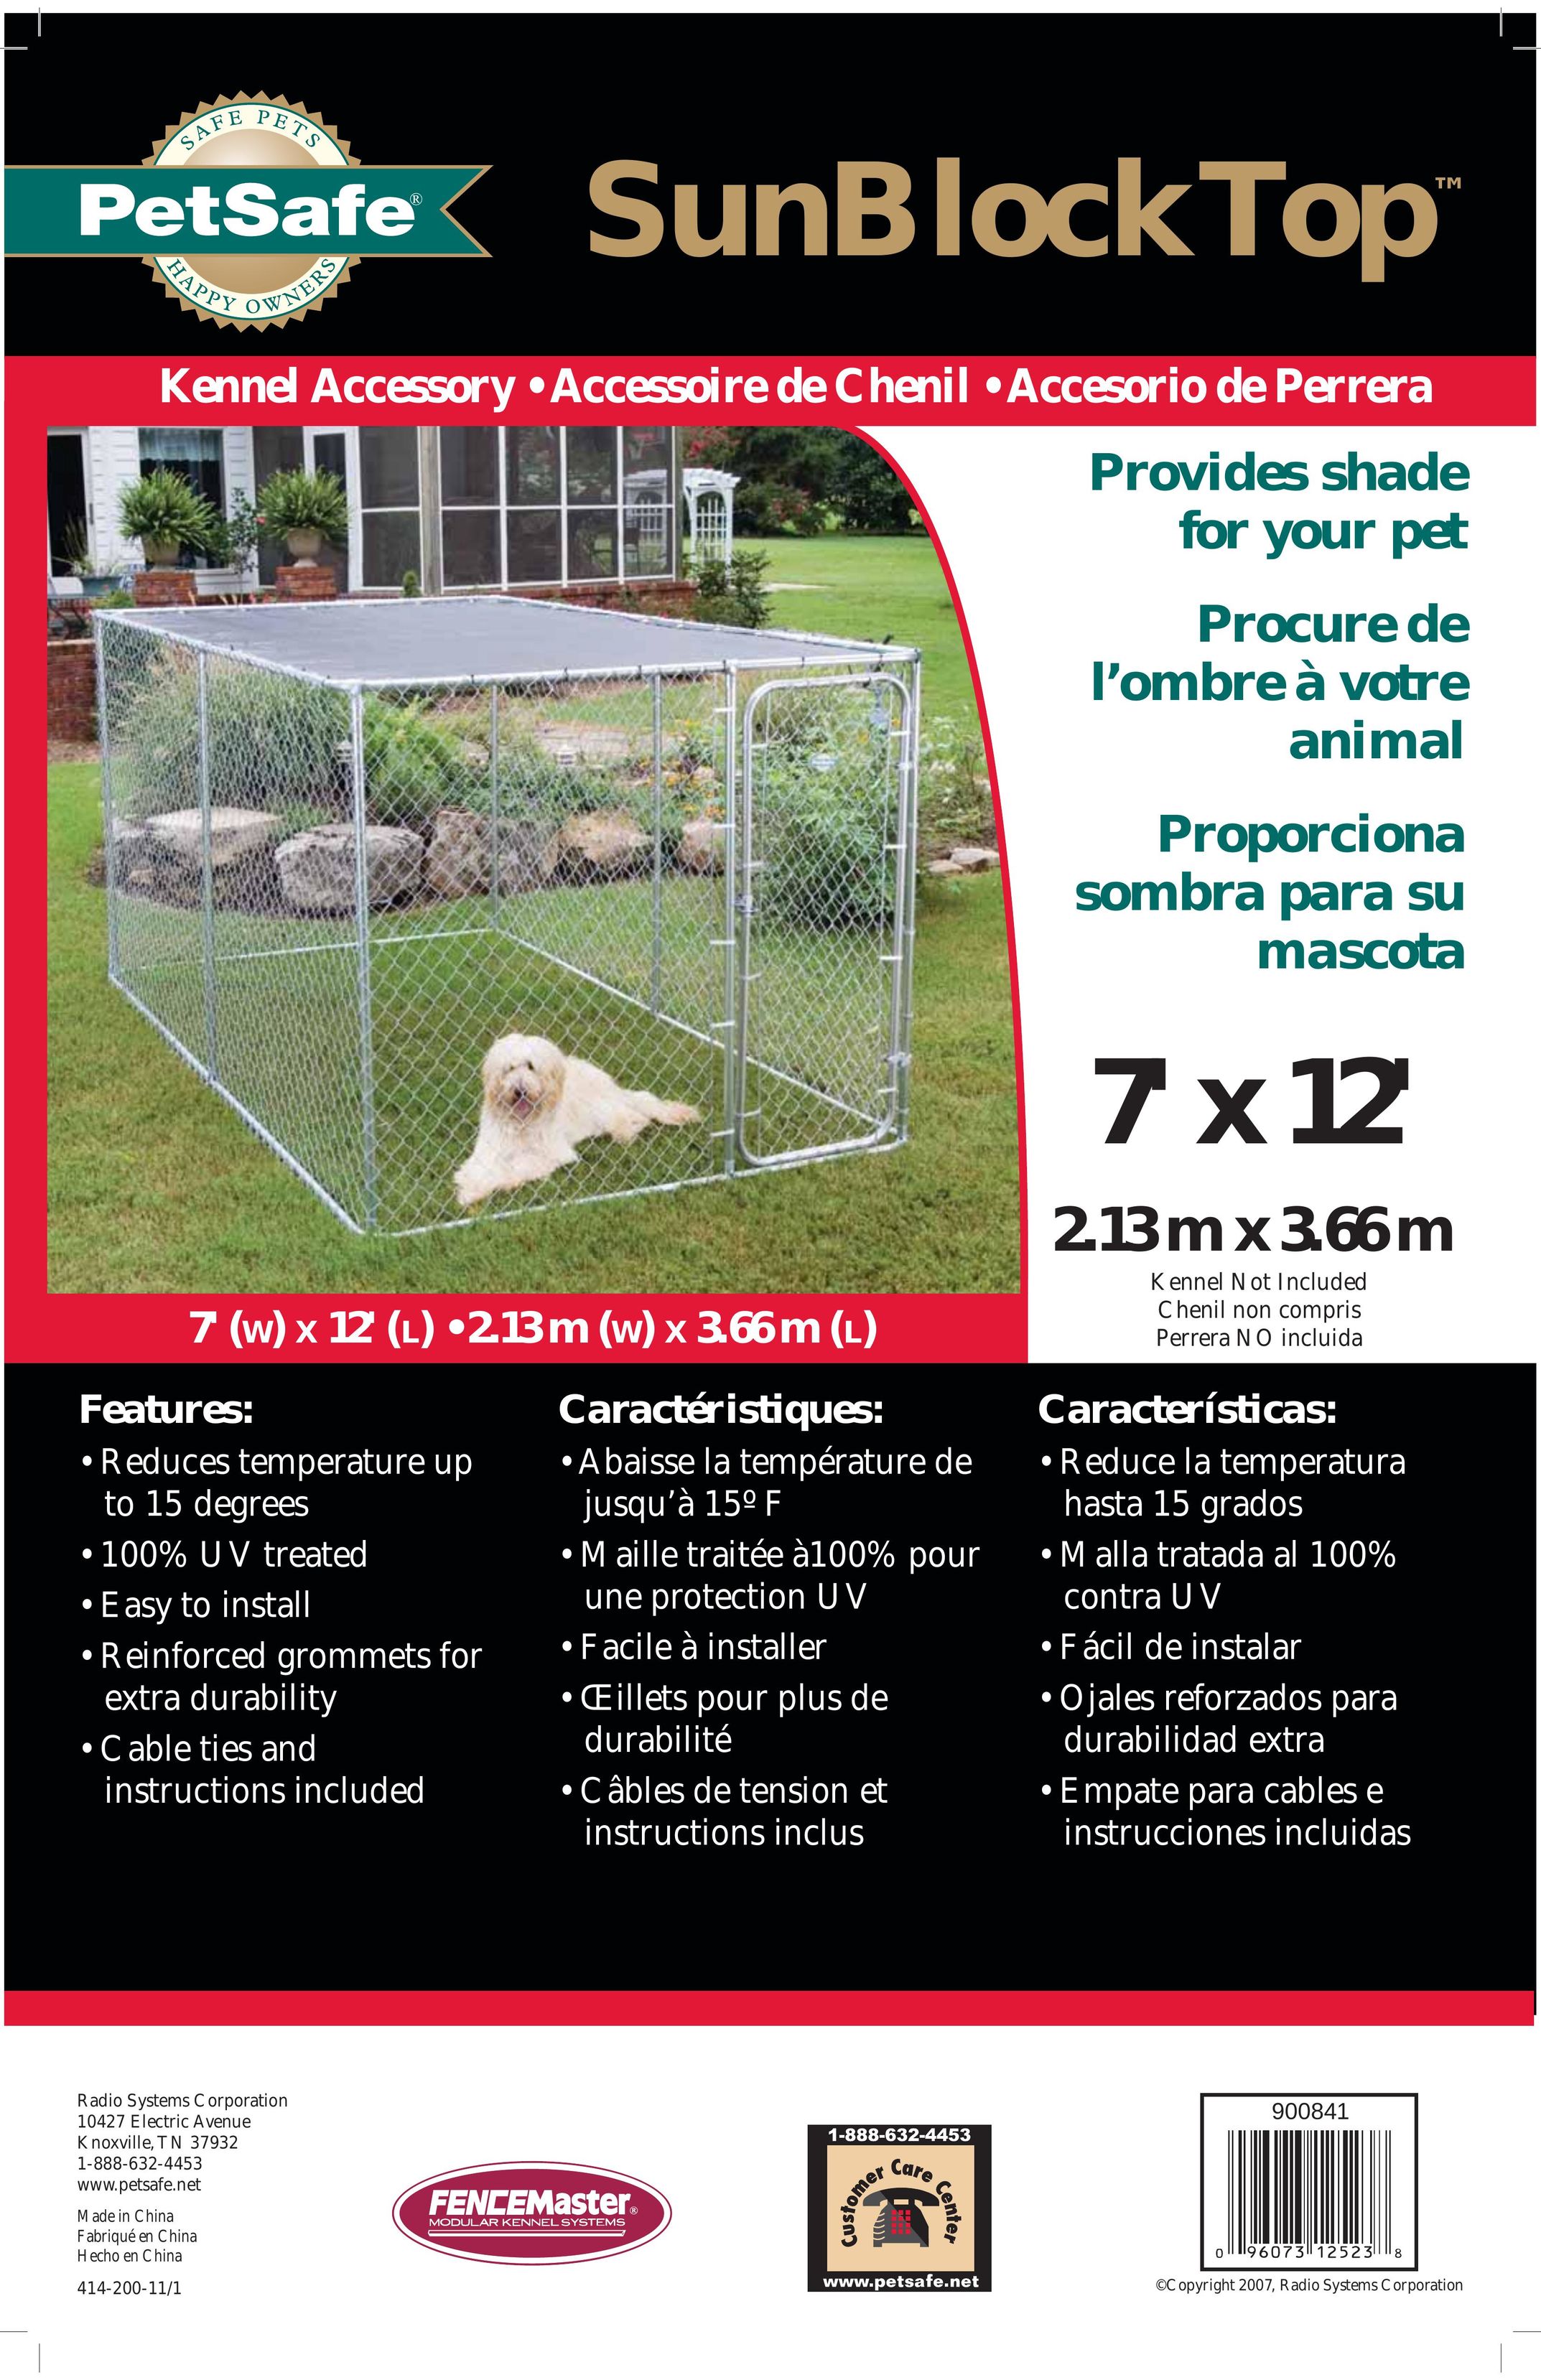 Petsafe Kennel Accessory Pet Fence User Manual